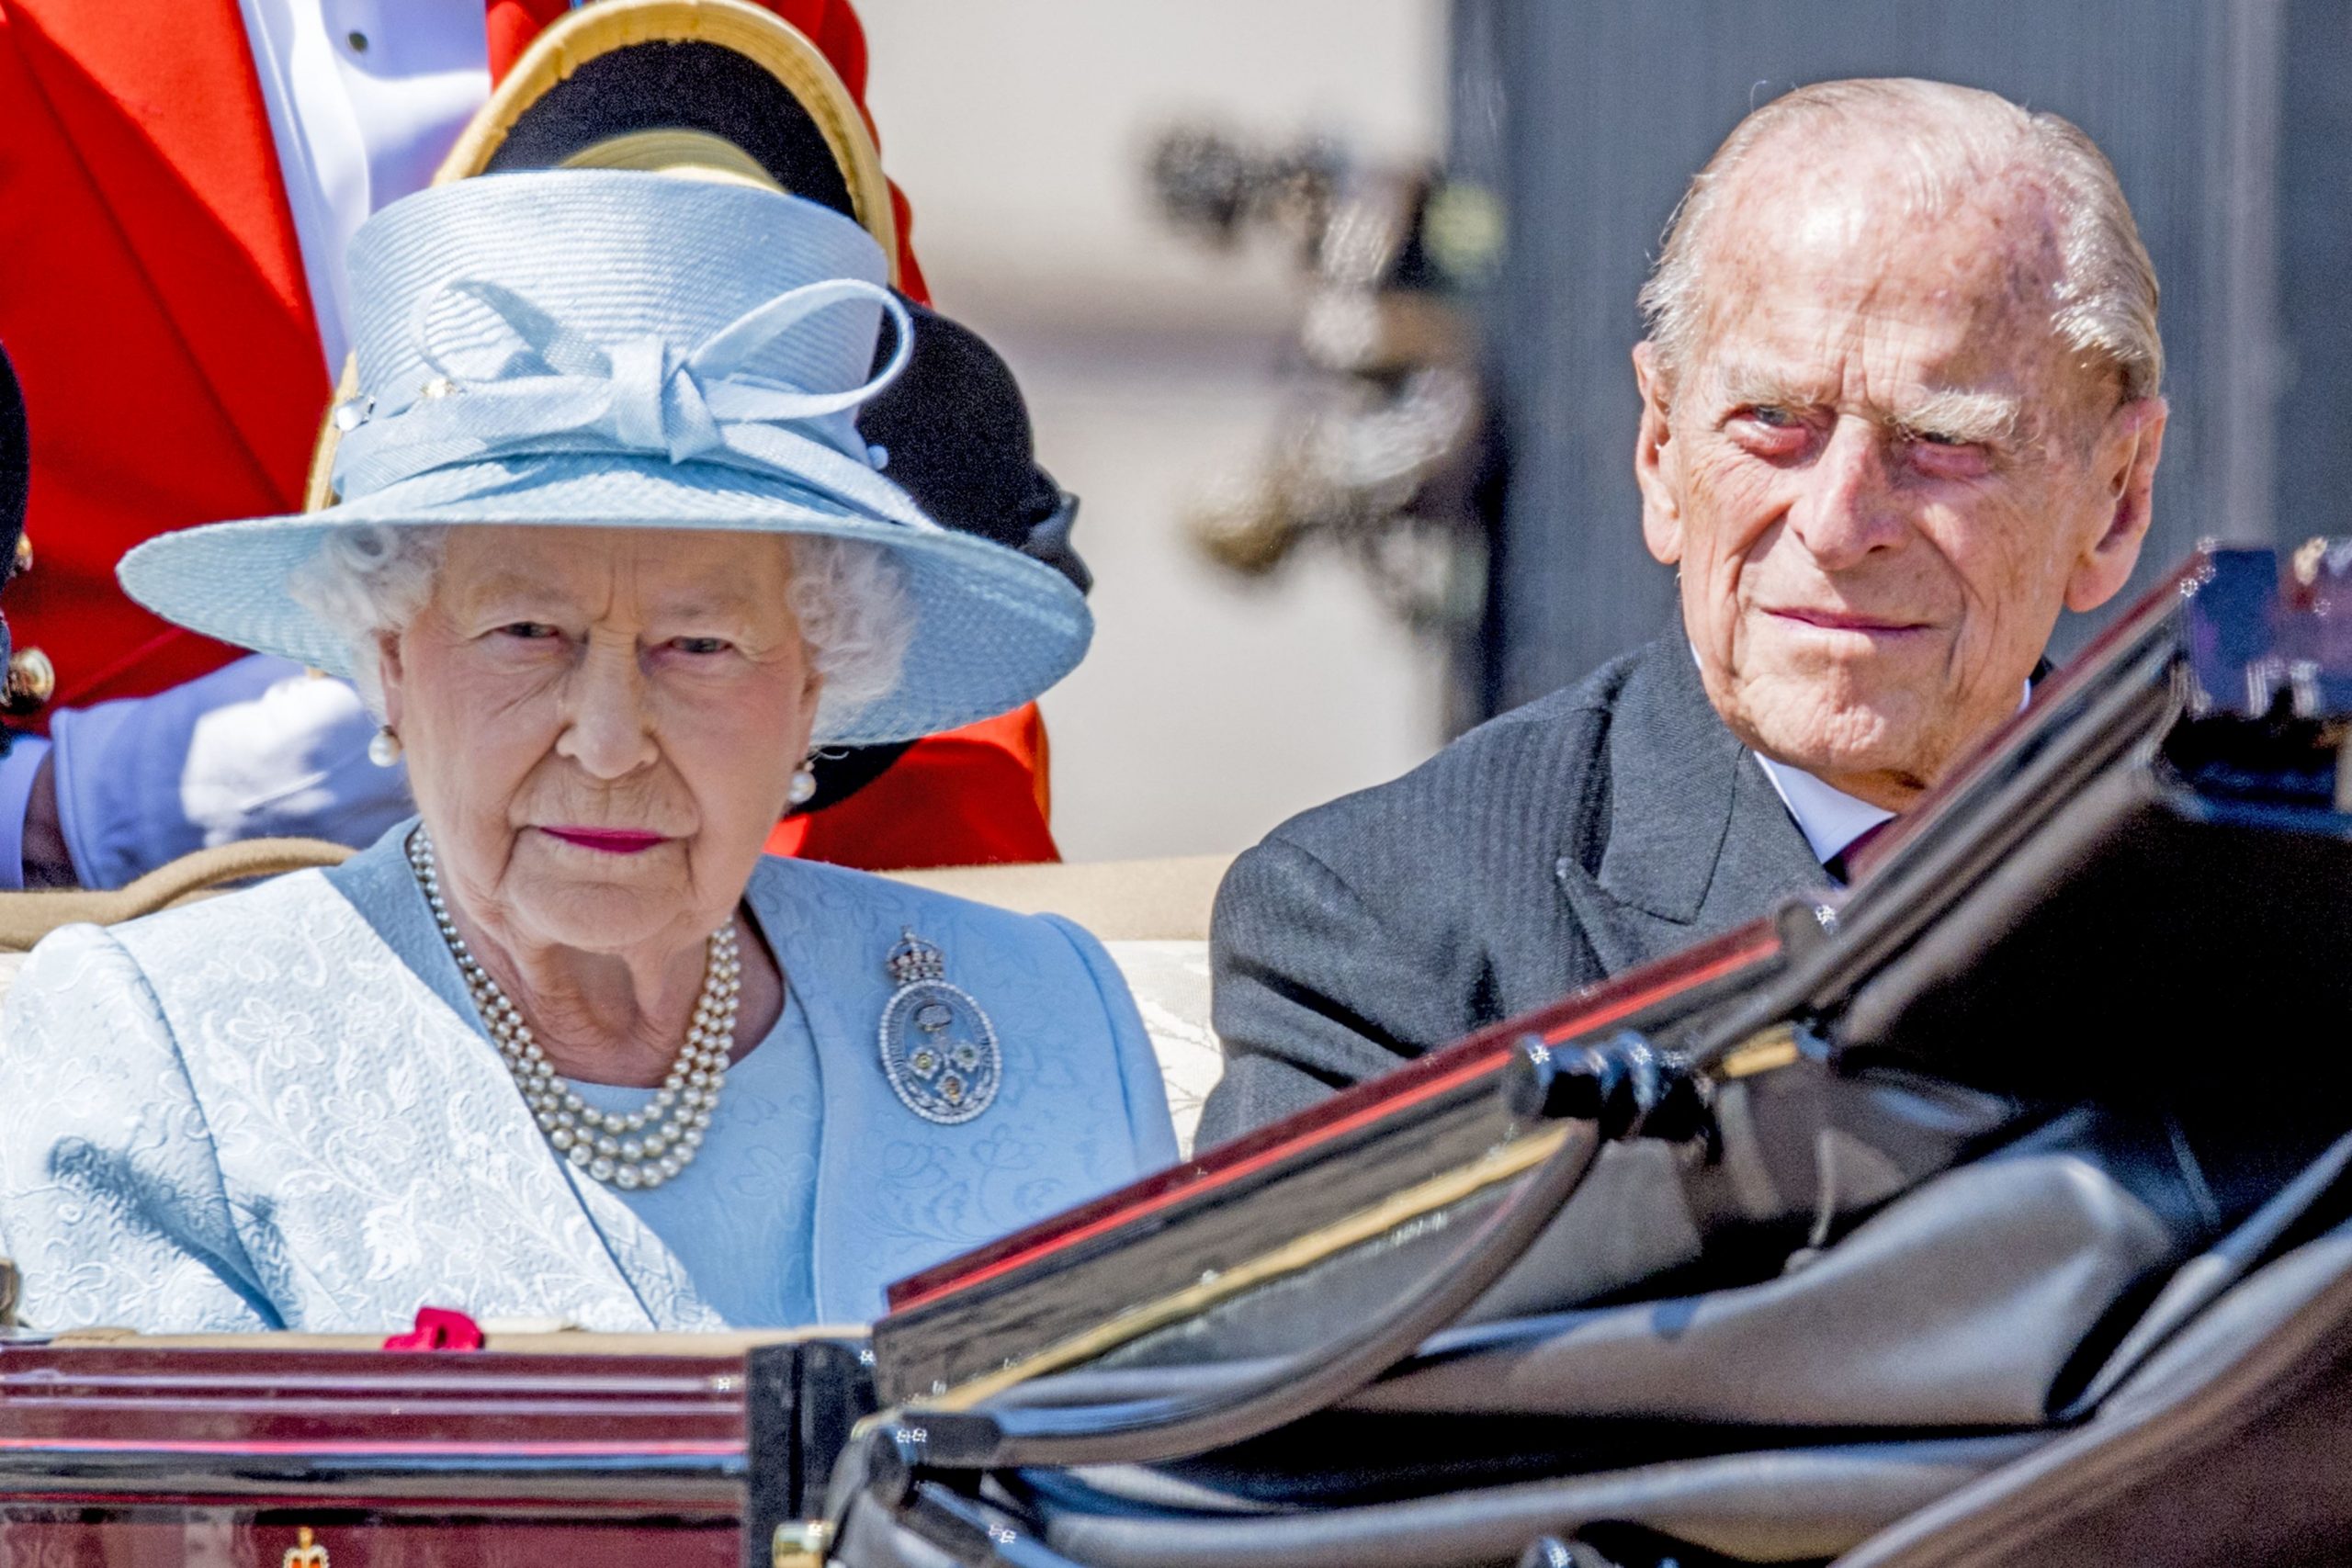 Regina Elisabeta a II-a a Marii Britanii și Prinţul Philip